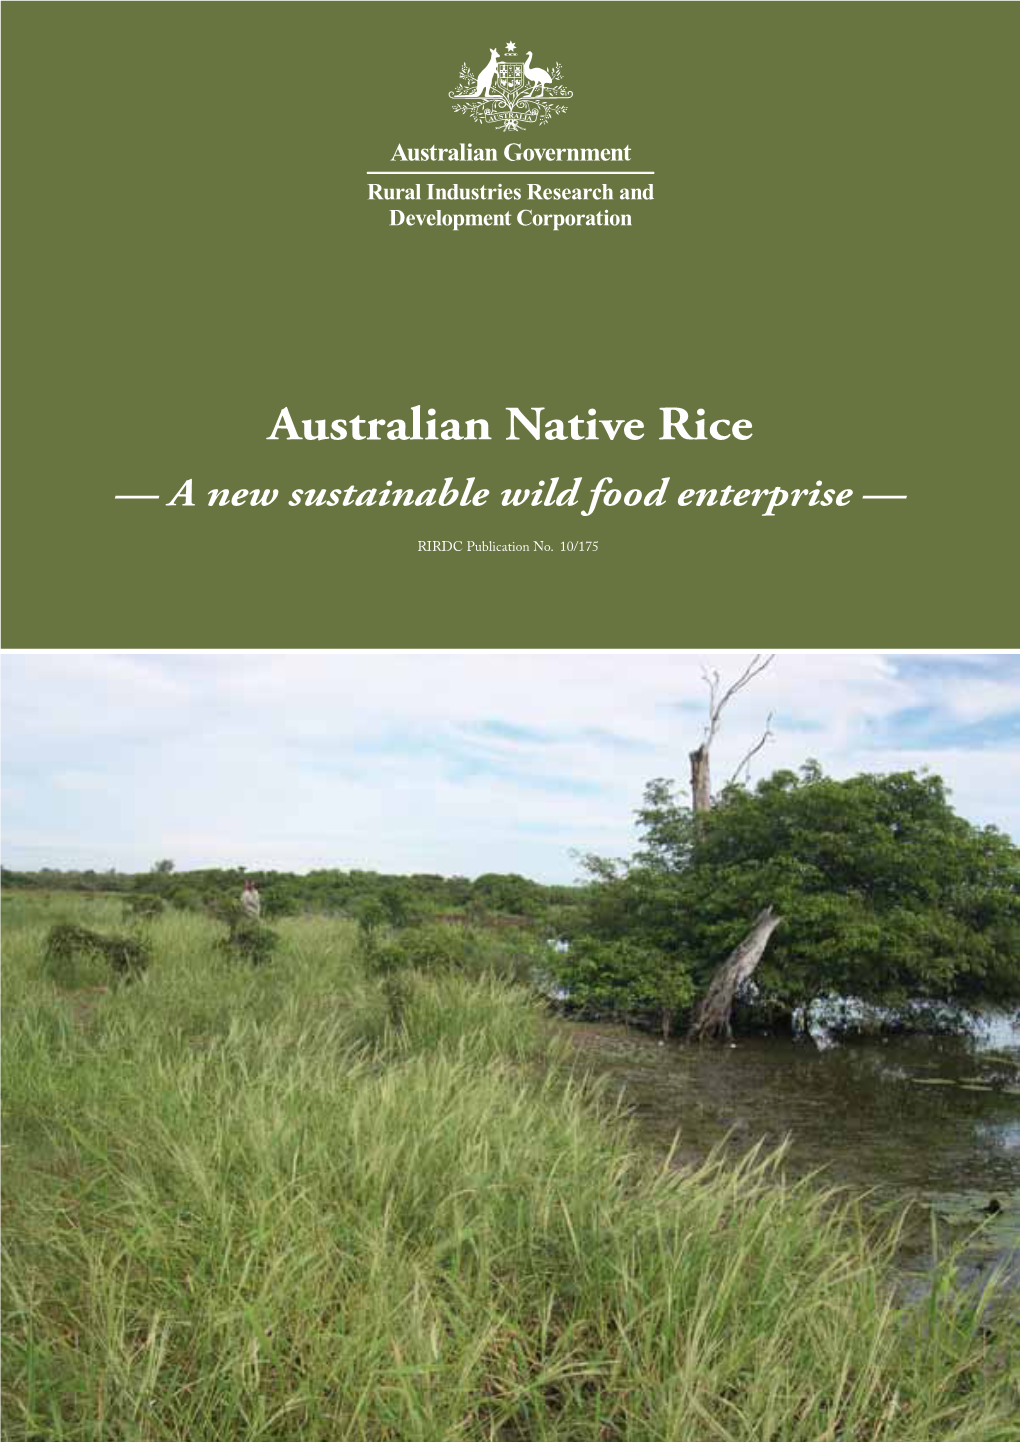 Australian Native Rice — a New Sustainable Wild Food Enterprise —